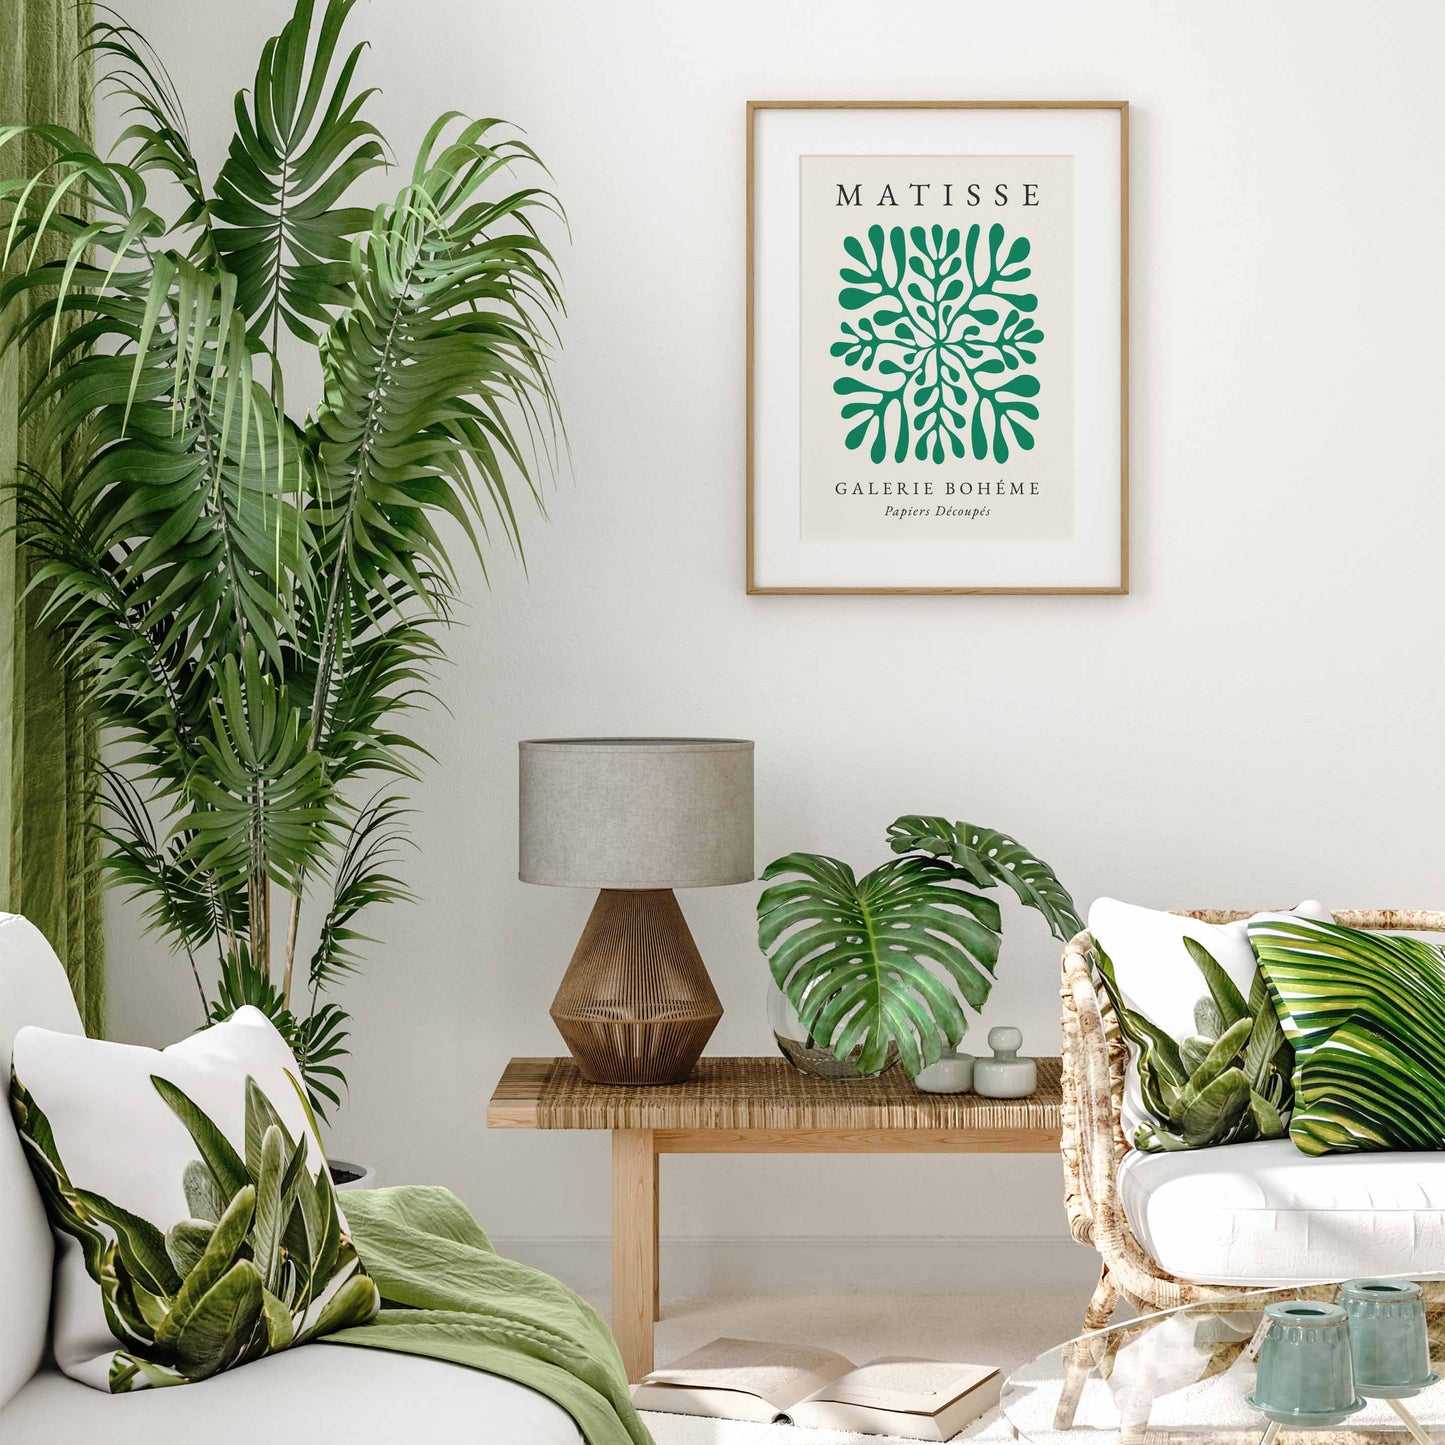 Green Matisse print in a minimalist style